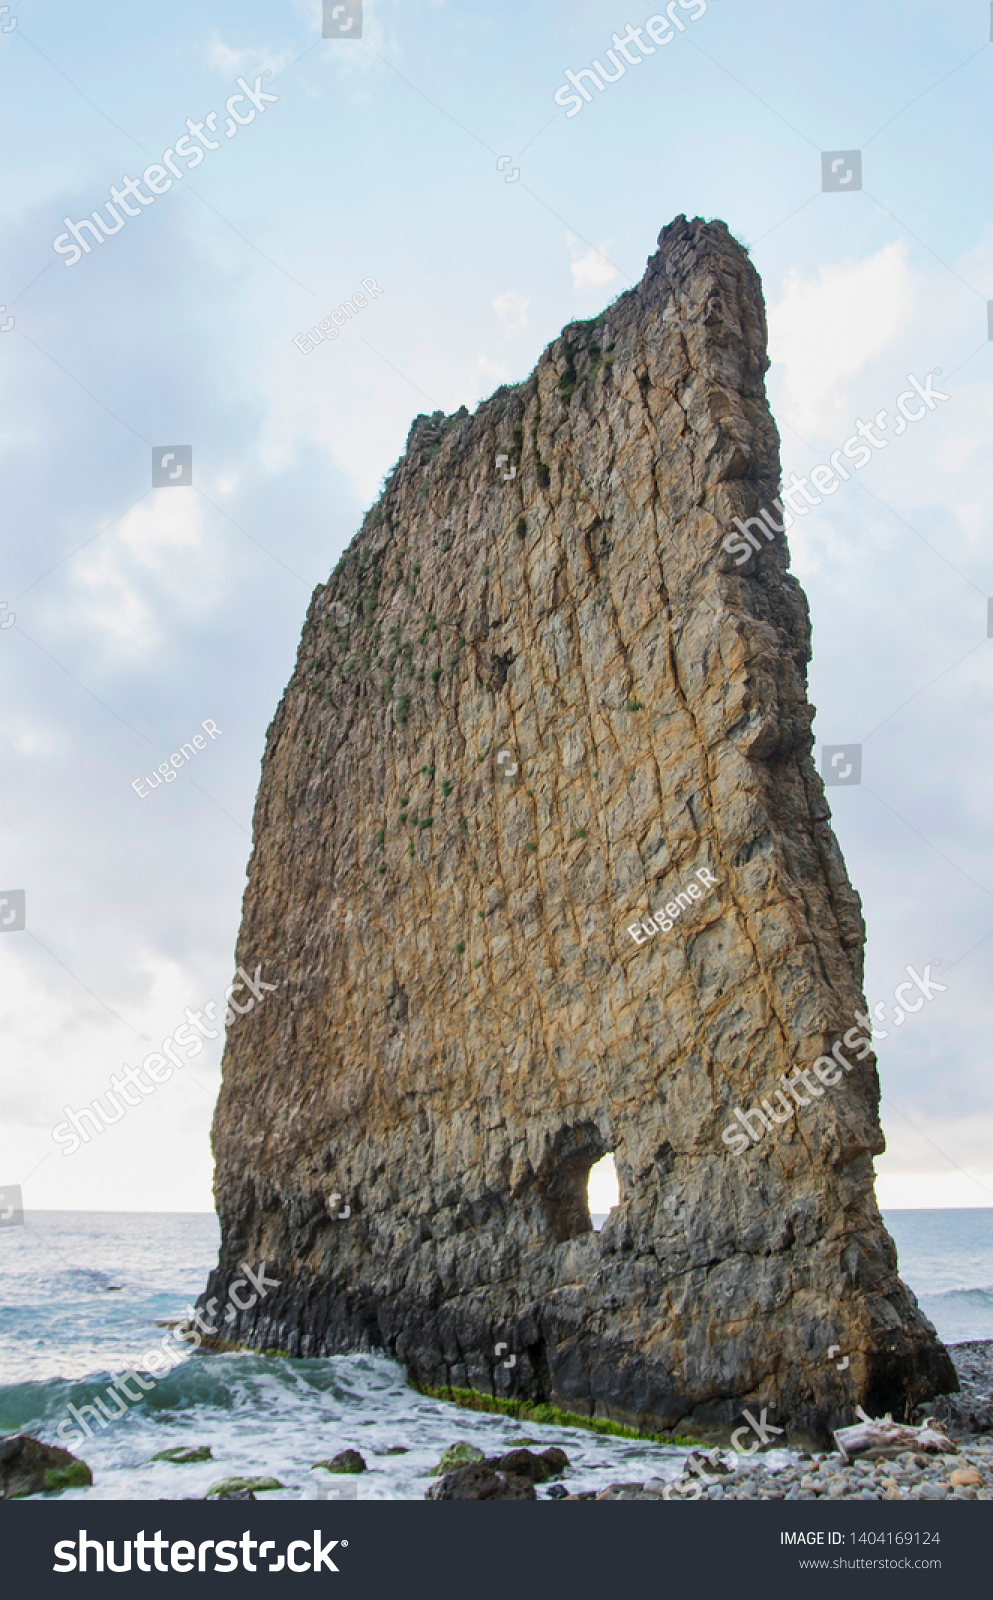 Monument of nature - Sail Rock, or Parus Rock. #1404169124